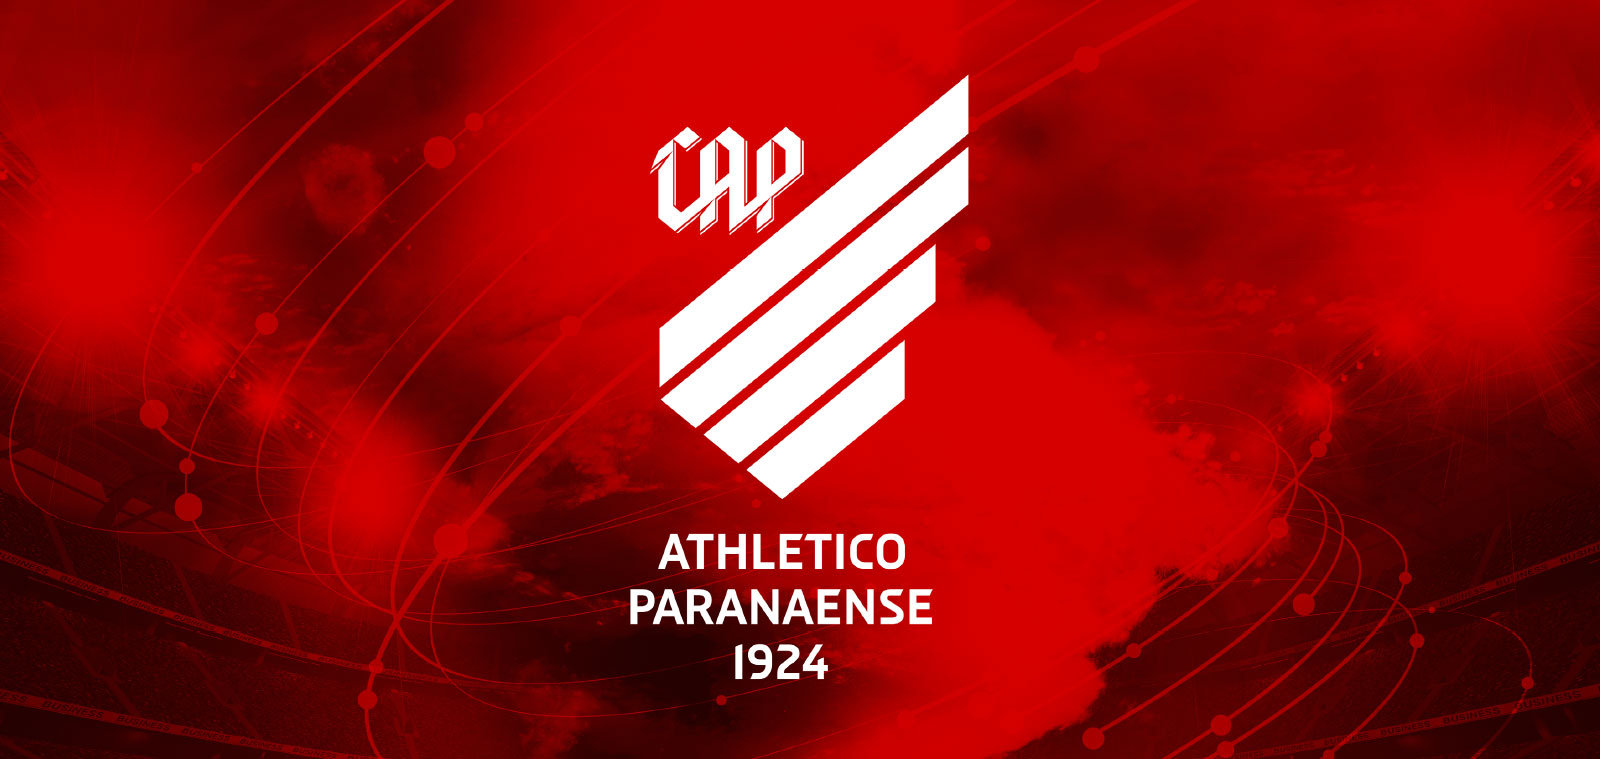 Club Athletico Paranaense